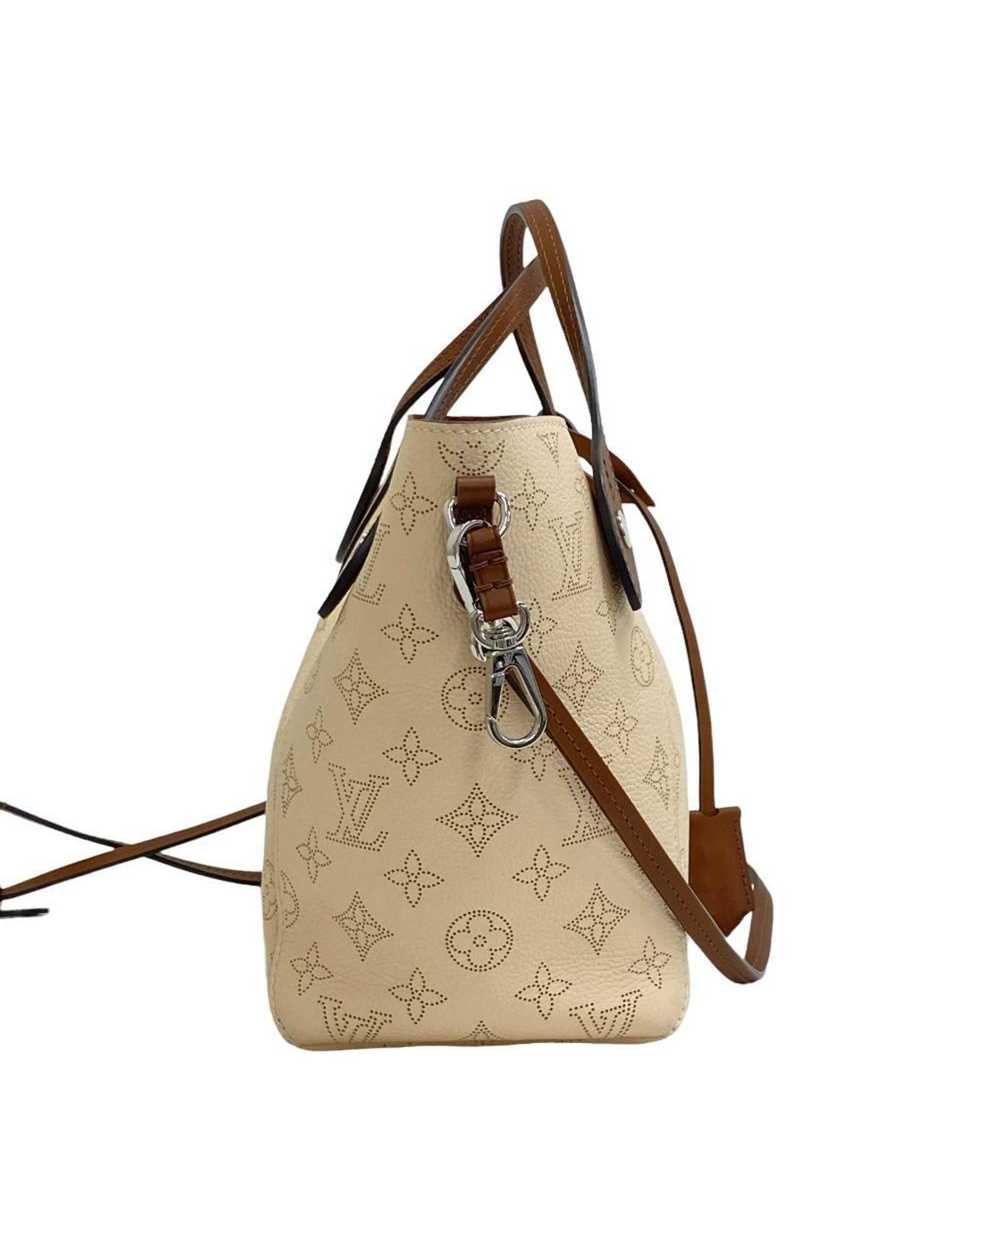 Louis Vuitton Elegant Beige Leather 2-Way Bag wit… - image 4